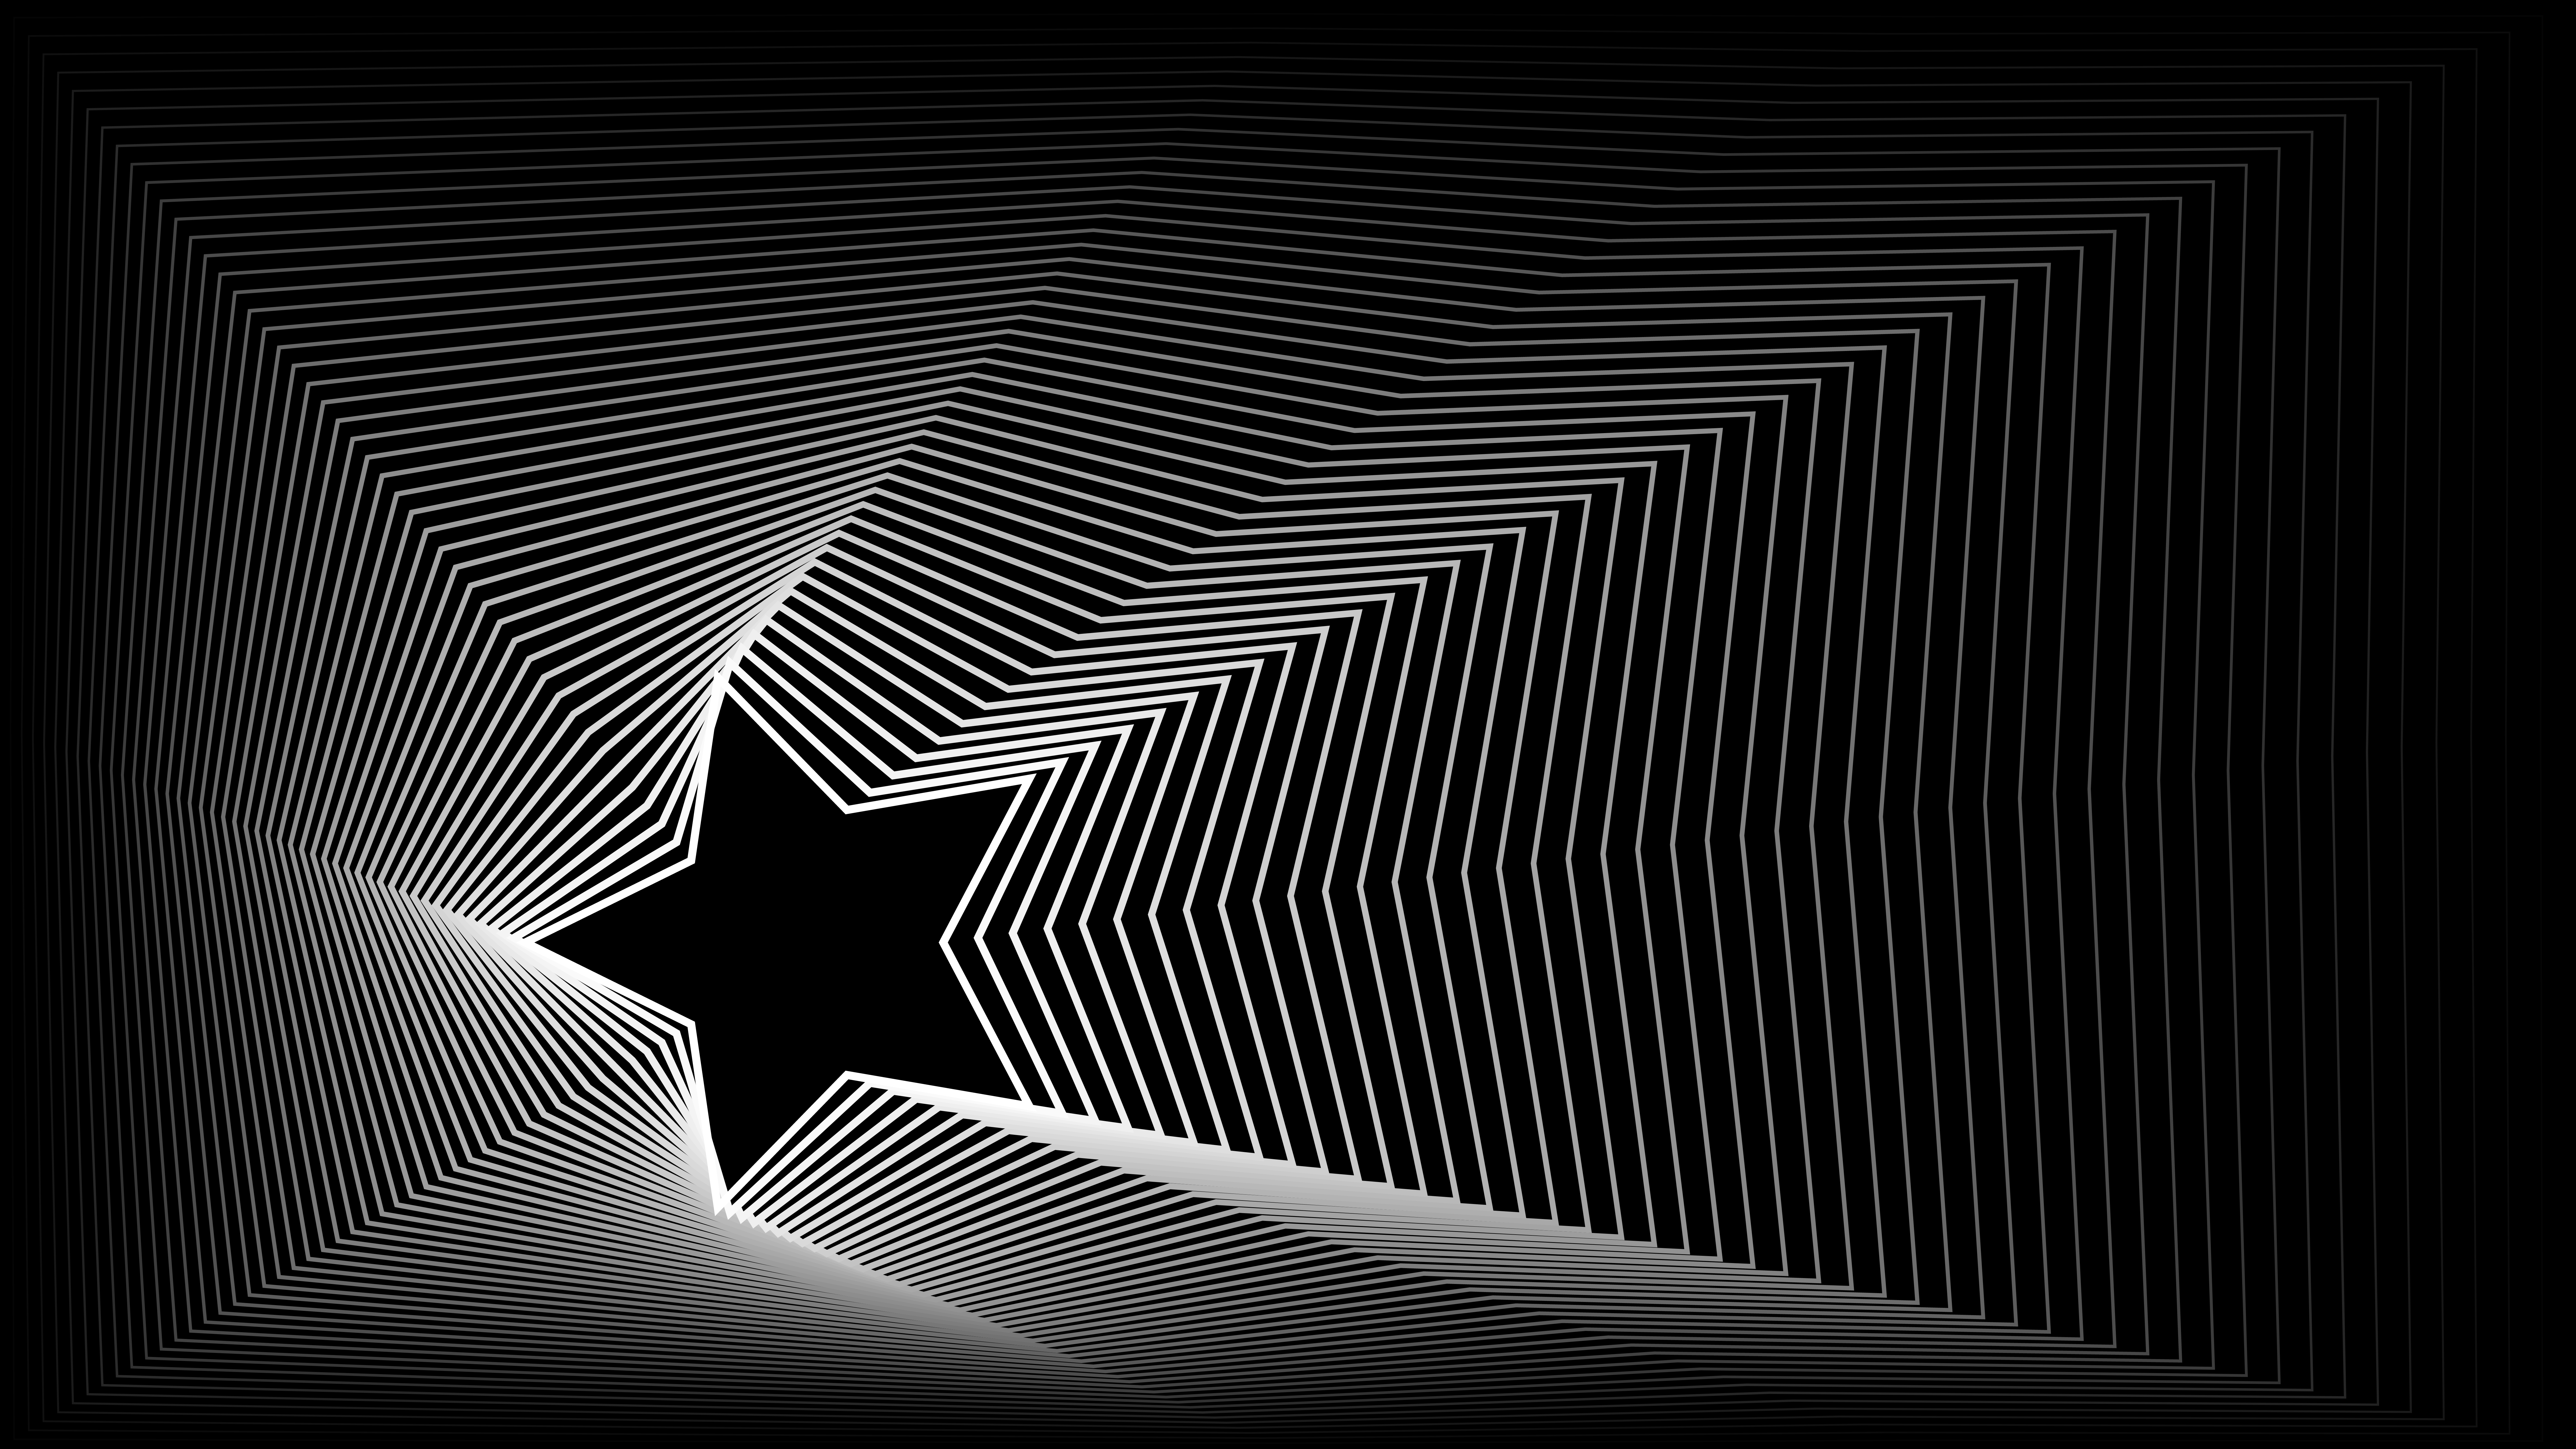 Black & White 8k Ultra HD Wallpaper by Iongherbovitan